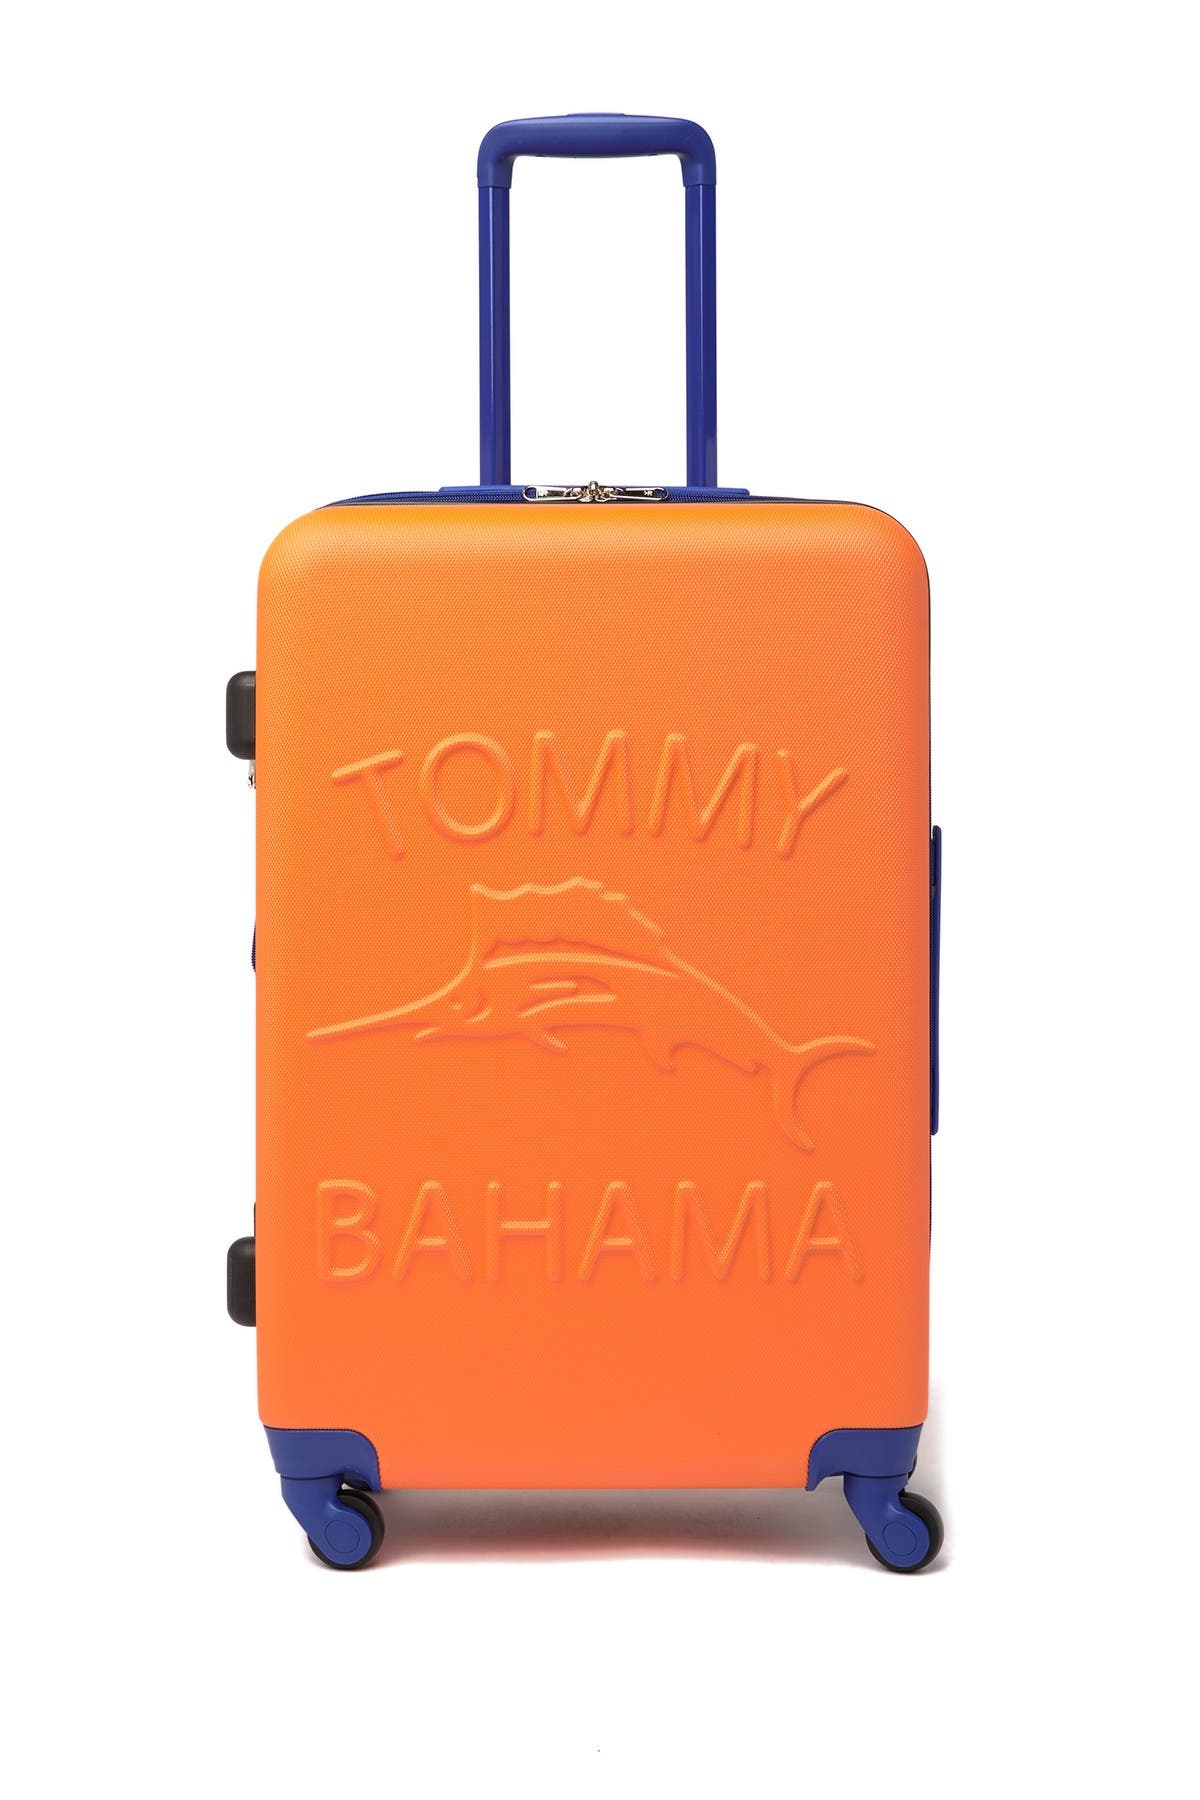 tommy bahama travel bag